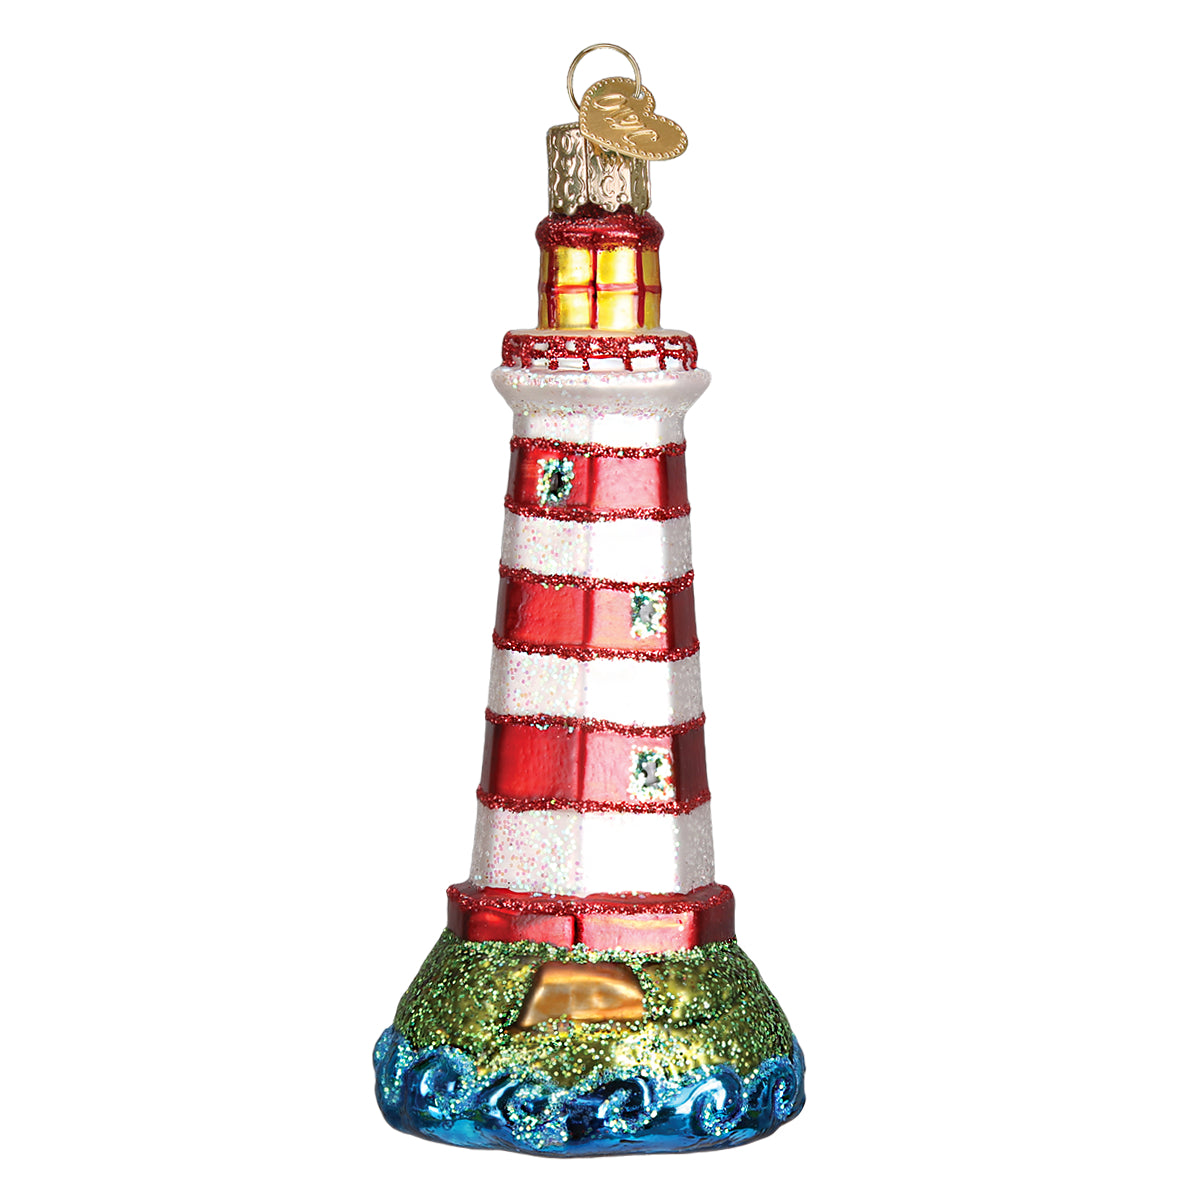 Sambro Lighthouse Ornament